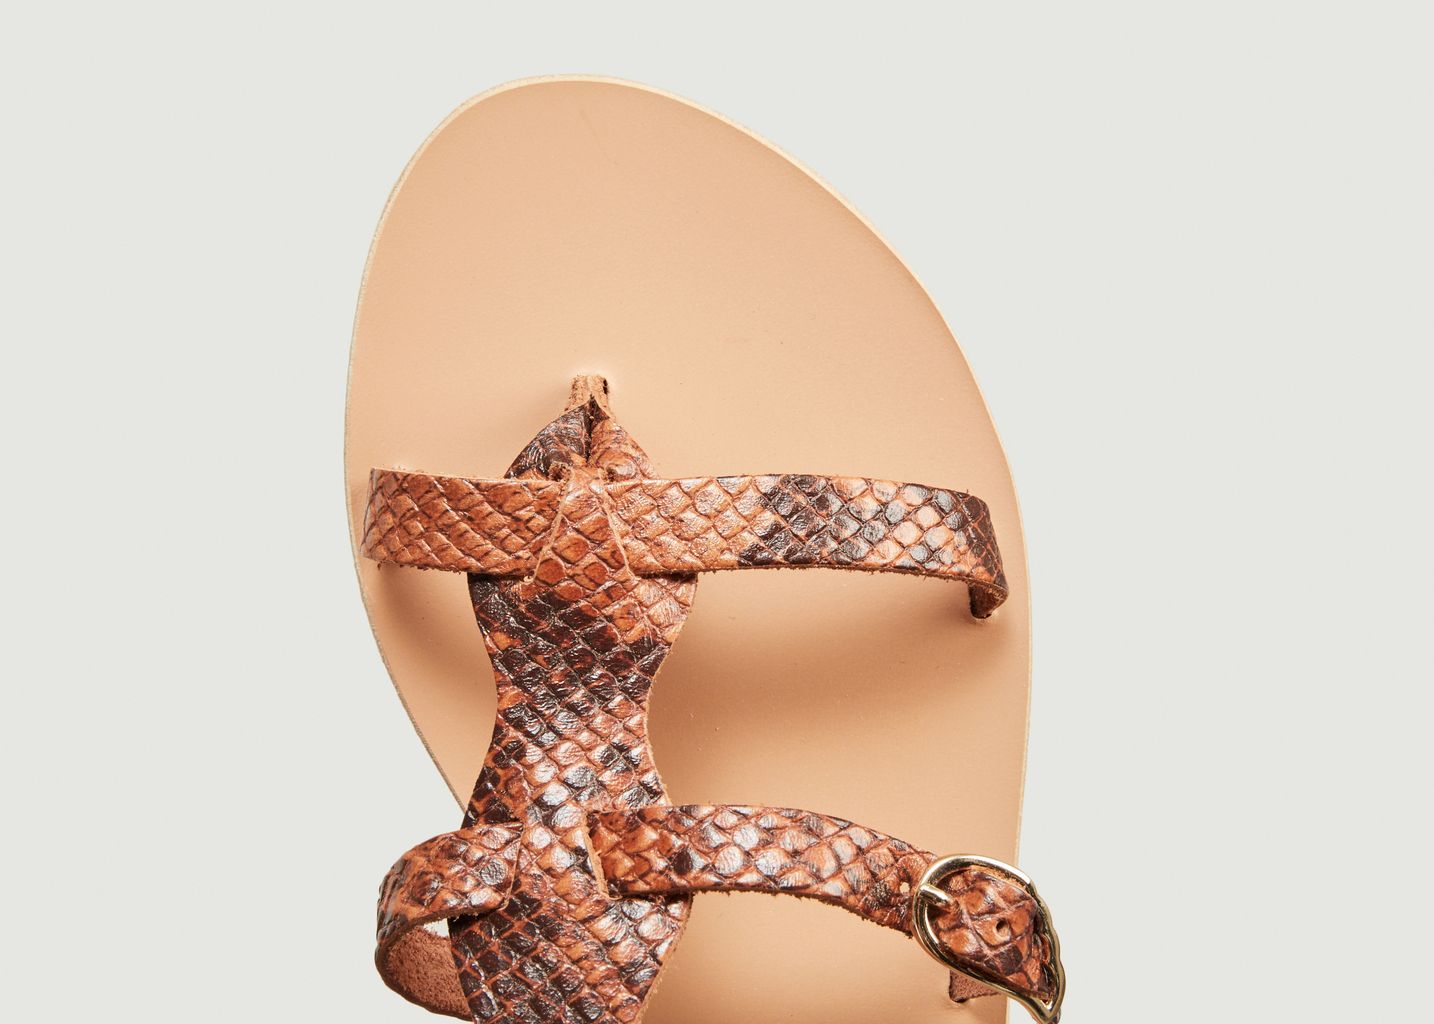 Grace Kelly python effect sandals - Ancient Greek Sandals